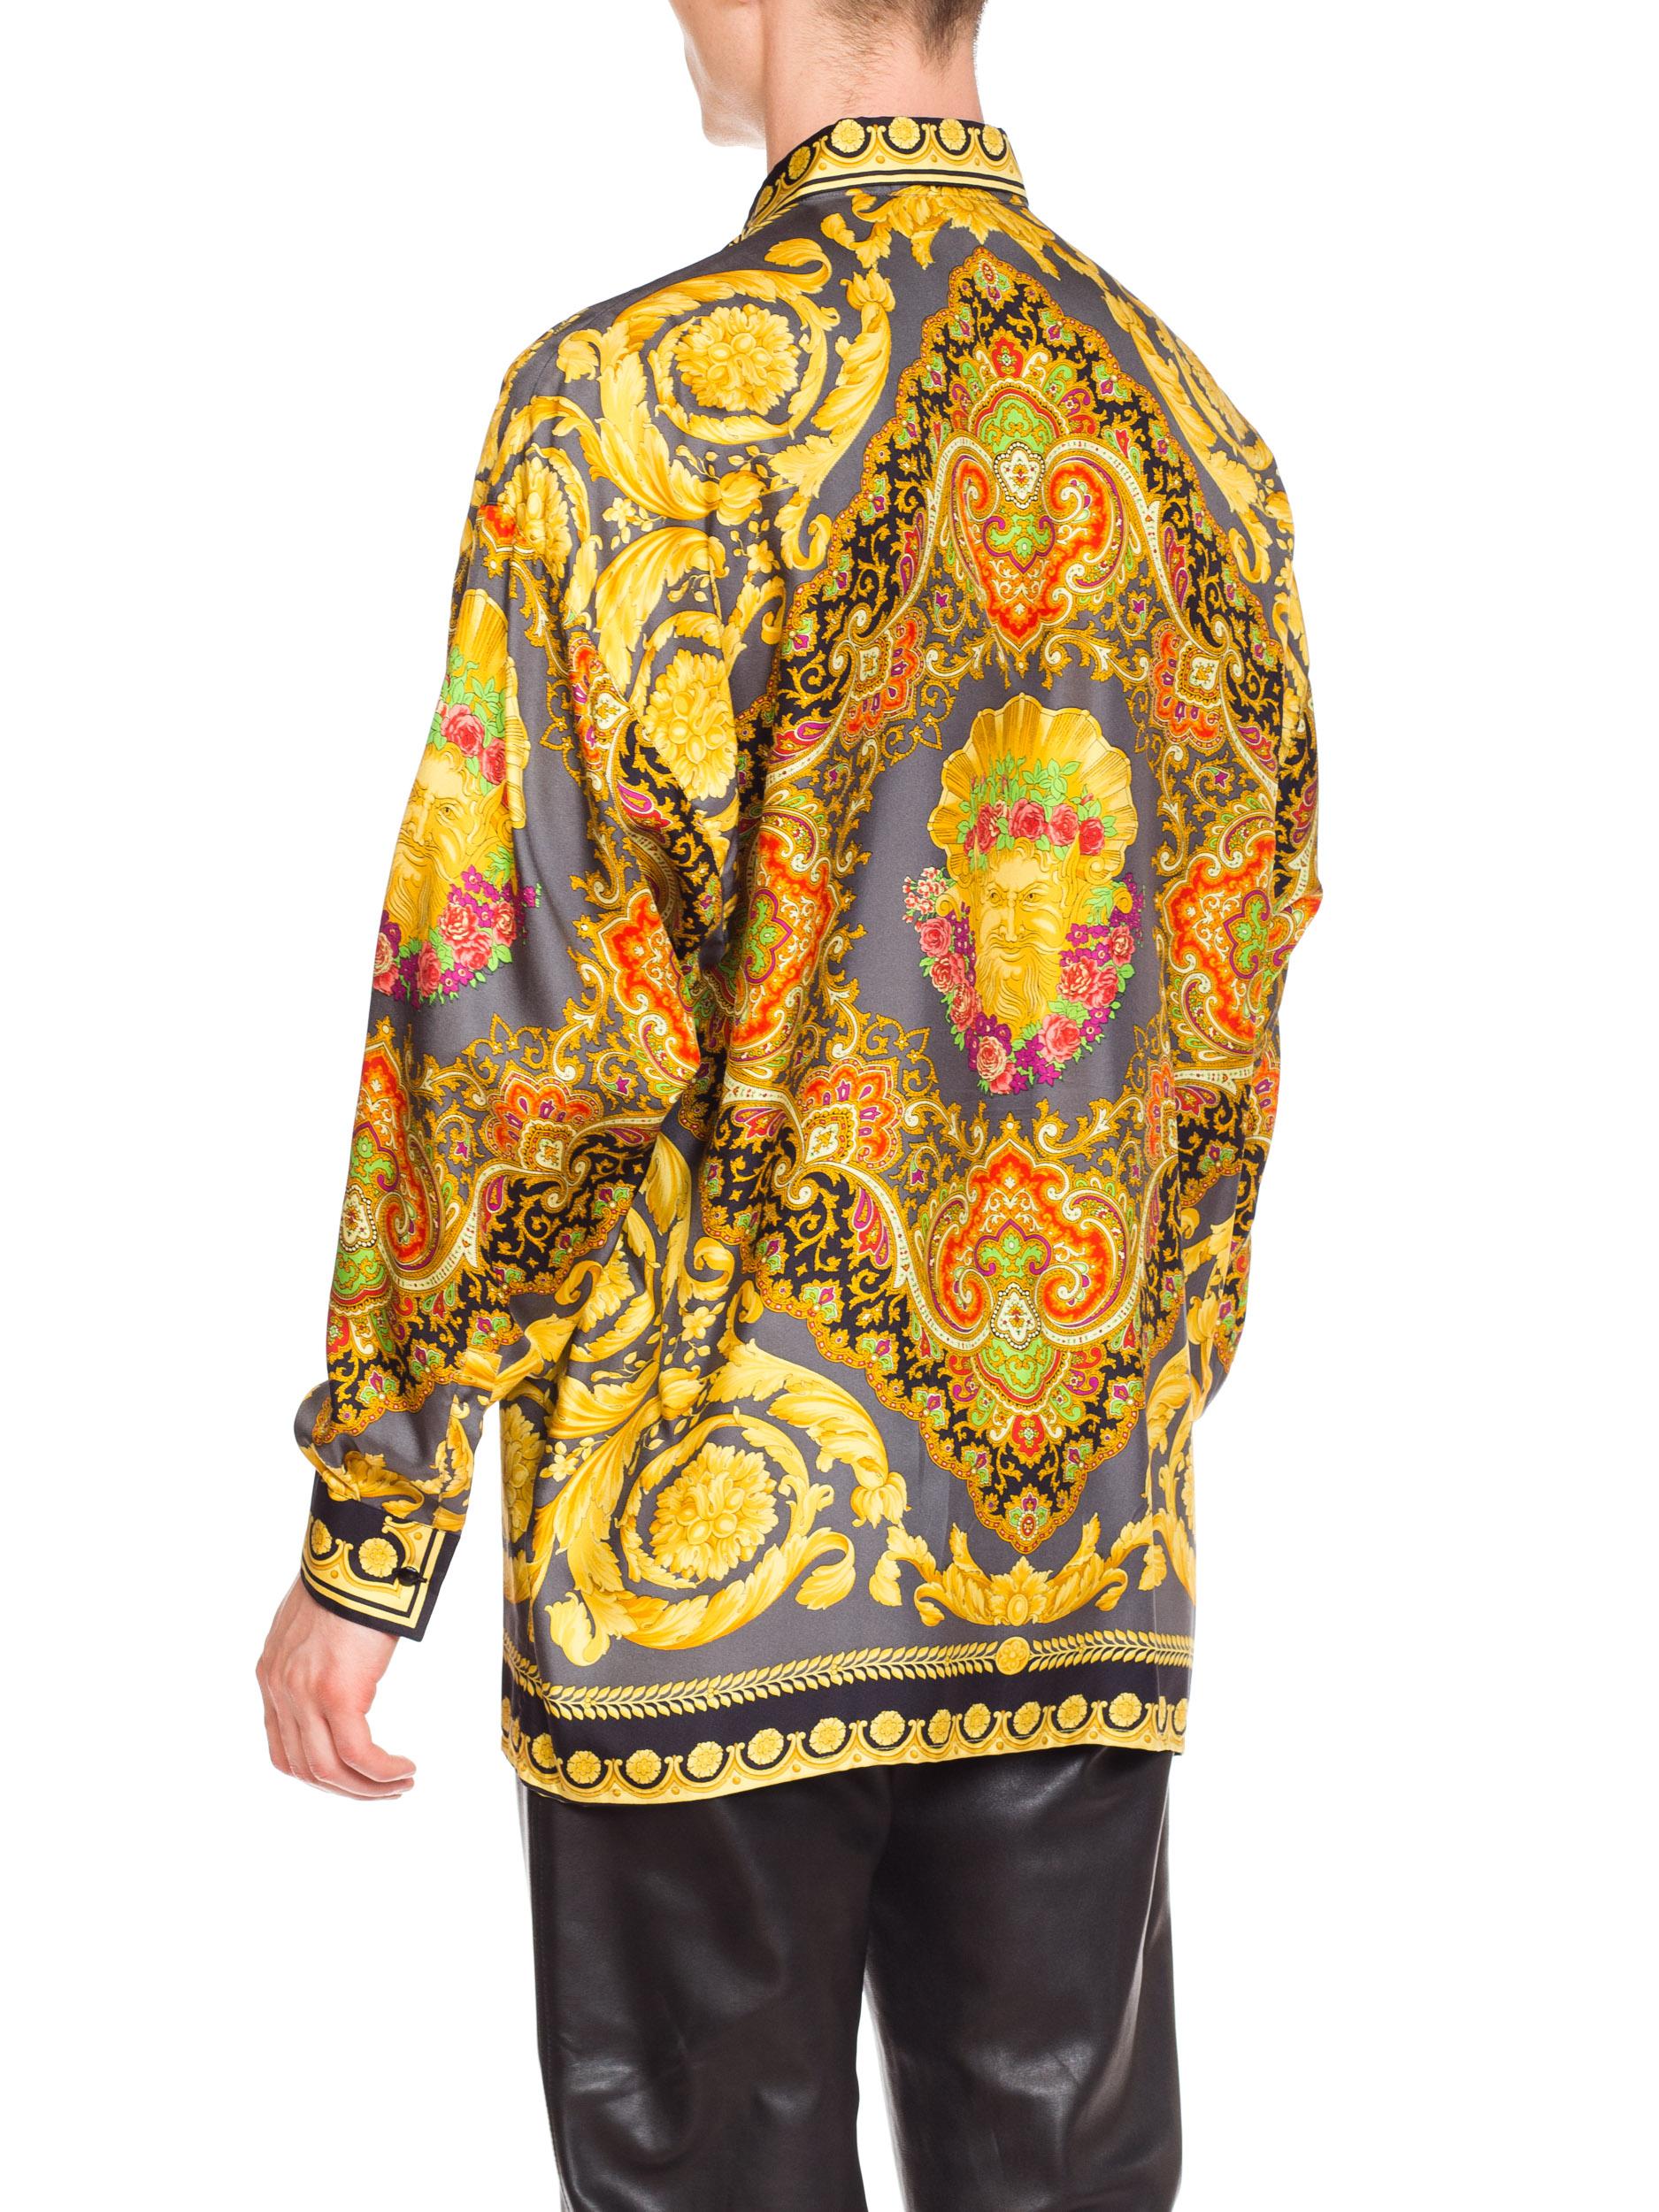 Women's or Men's Gianni Versace Men's Baroque Silk Paisley Shirt, 1990s 